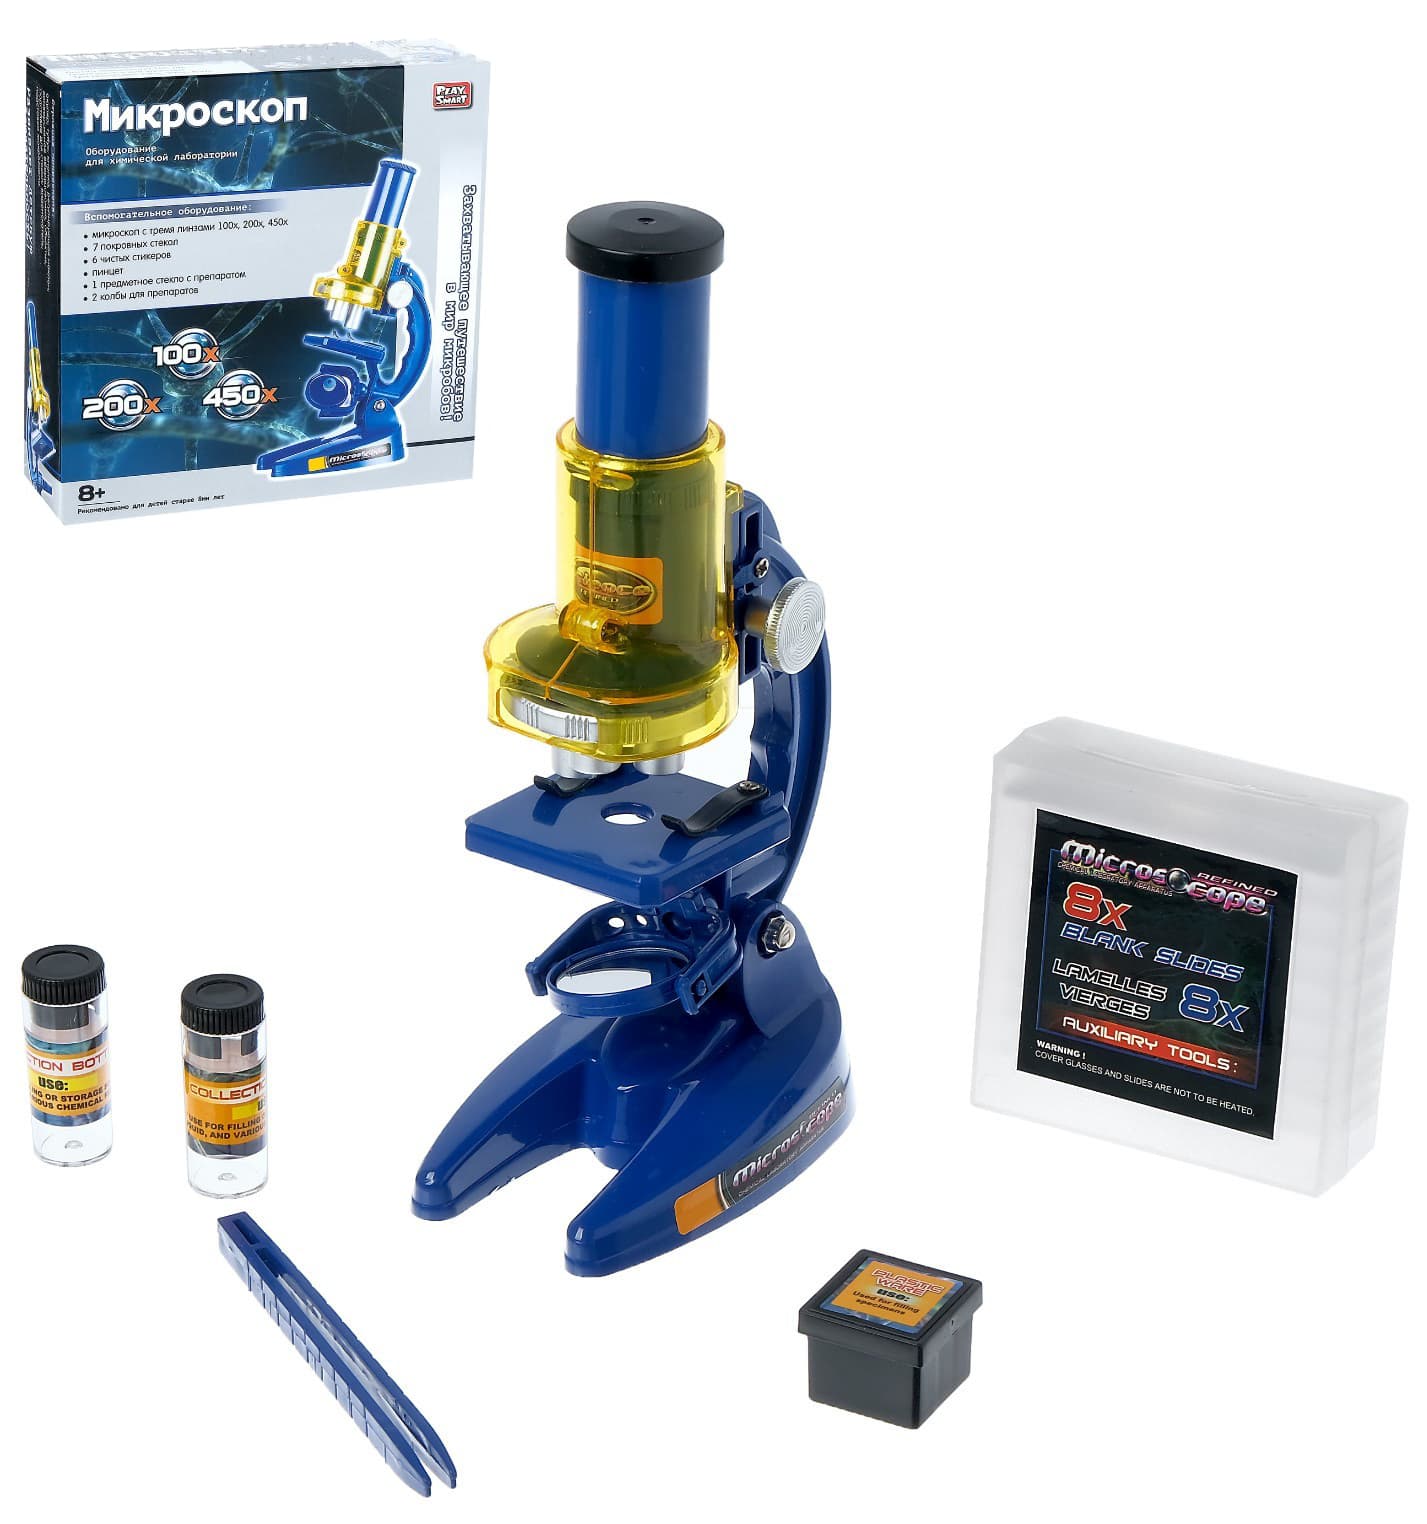 Обучающая игрушка Play Smart «Микроскоп»